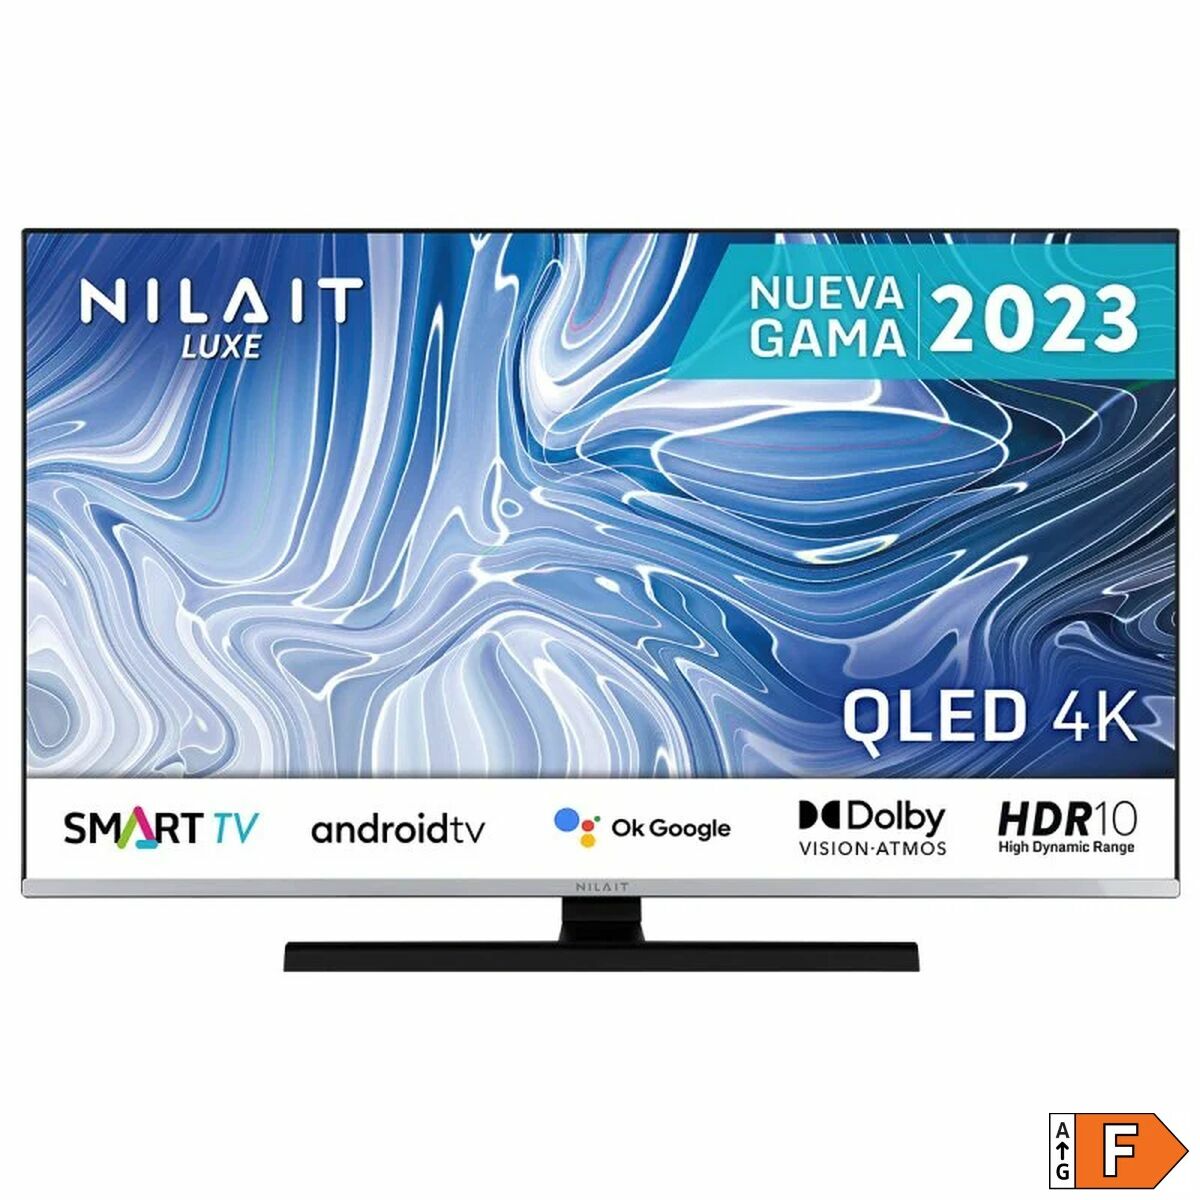 Smart TV Nilait Luxe NI-43UB8002S 4K Ultra HD 43", Nilait, Electronics, TV, Video and home cinema, smart-tv-nilait-luxe-ni-43ub8002s-4k-ultra-hd-43, :43 INCH or 109.2 CM, :Ultra HD, Brand_Nilait, category-reference-2609, category-reference-2625, category-reference-2931, category-reference-t-18805, category-reference-t-19653, cinema and television, Condition_NEW, entertainment, Price_800 - 900, RiotNook